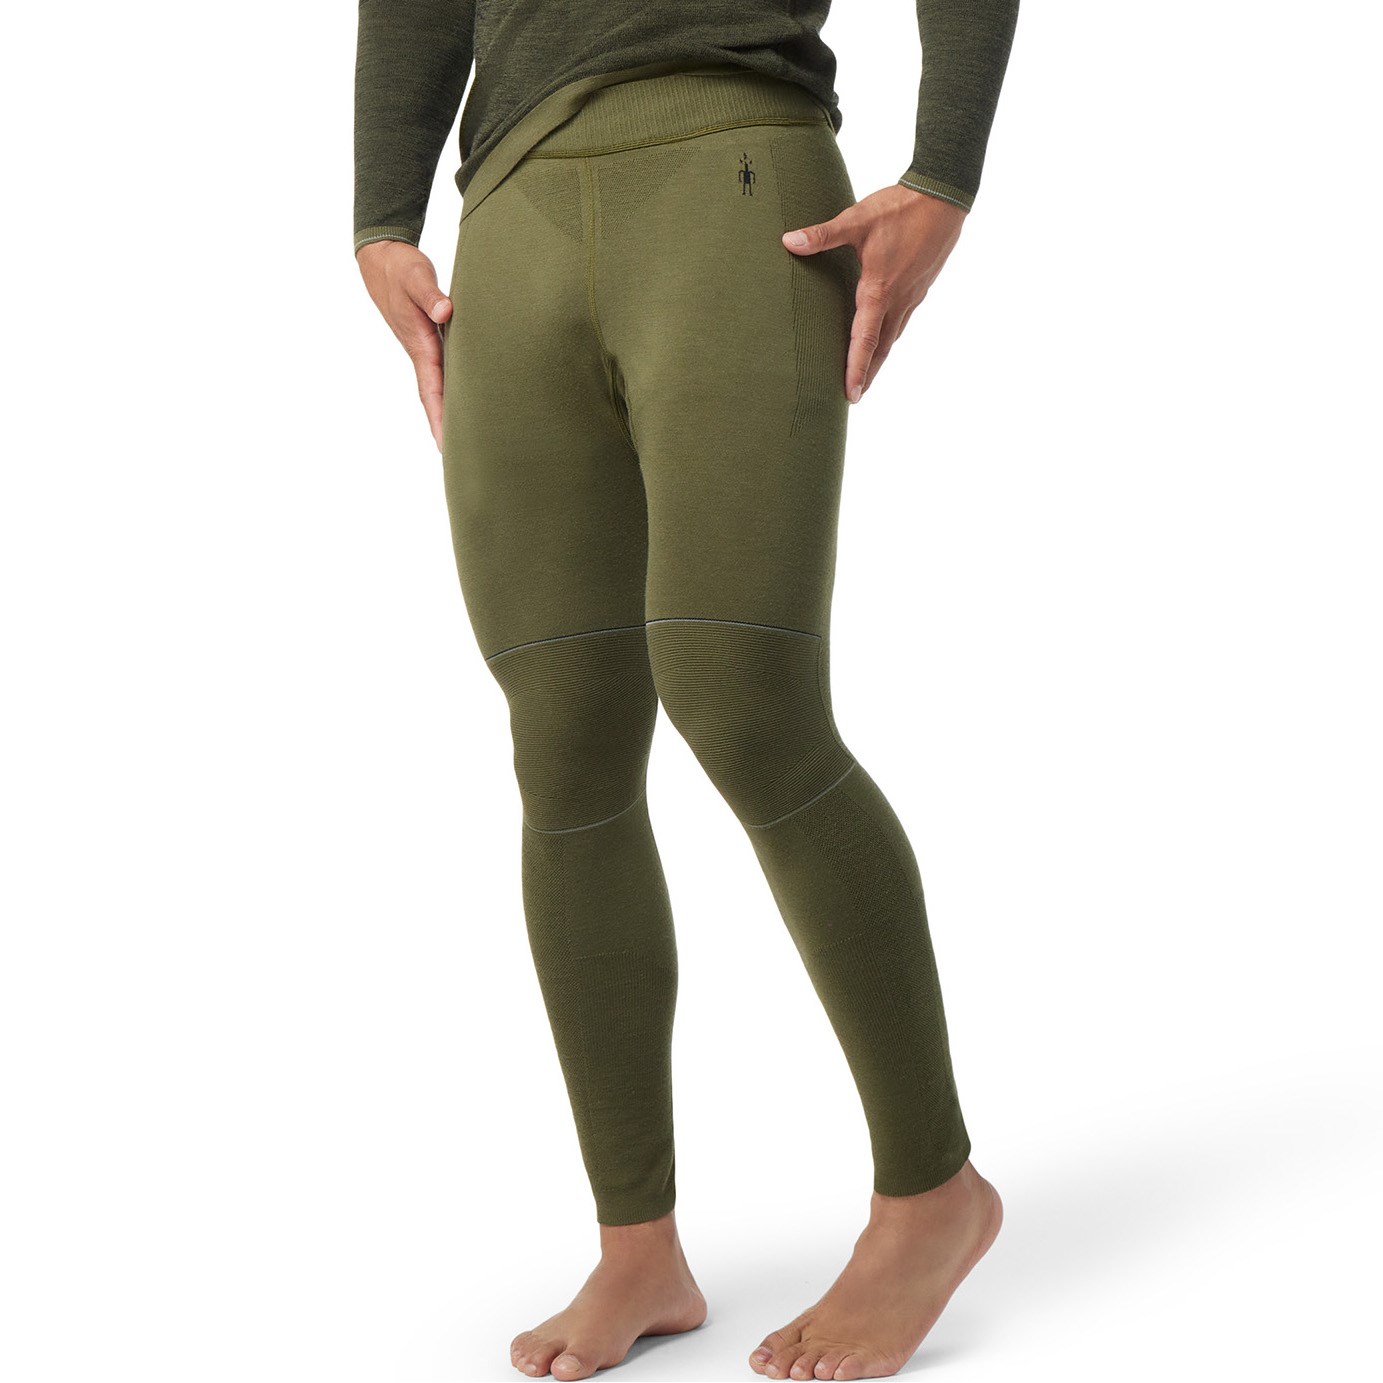 Classic Series Merino Wool Thermal Underwear Pants, Commando Green